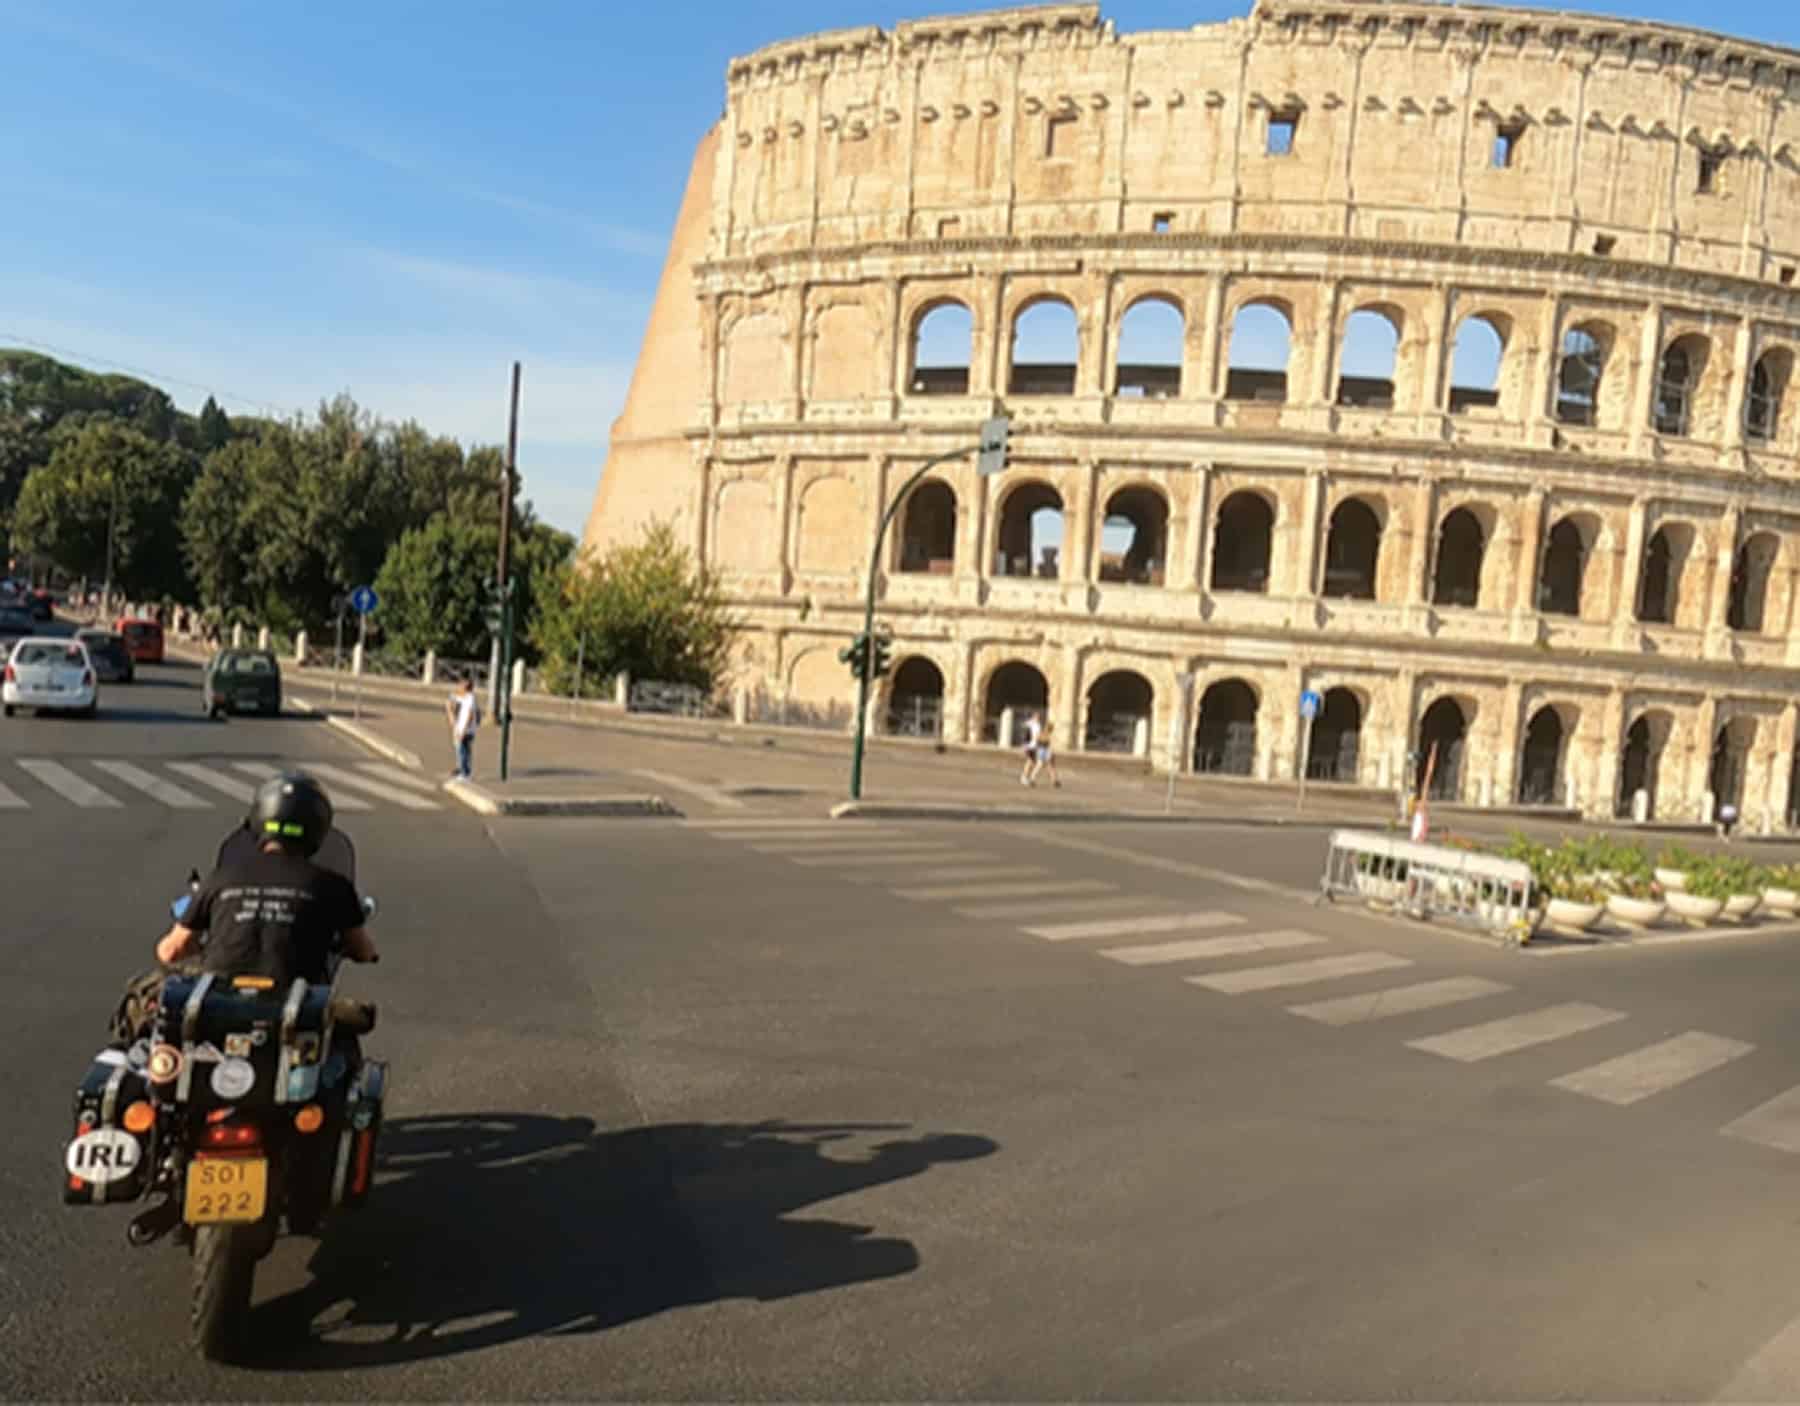 Chris Donaldson riding his 1977 Moto Guzzi Le Mans past the Colosseum in Rome